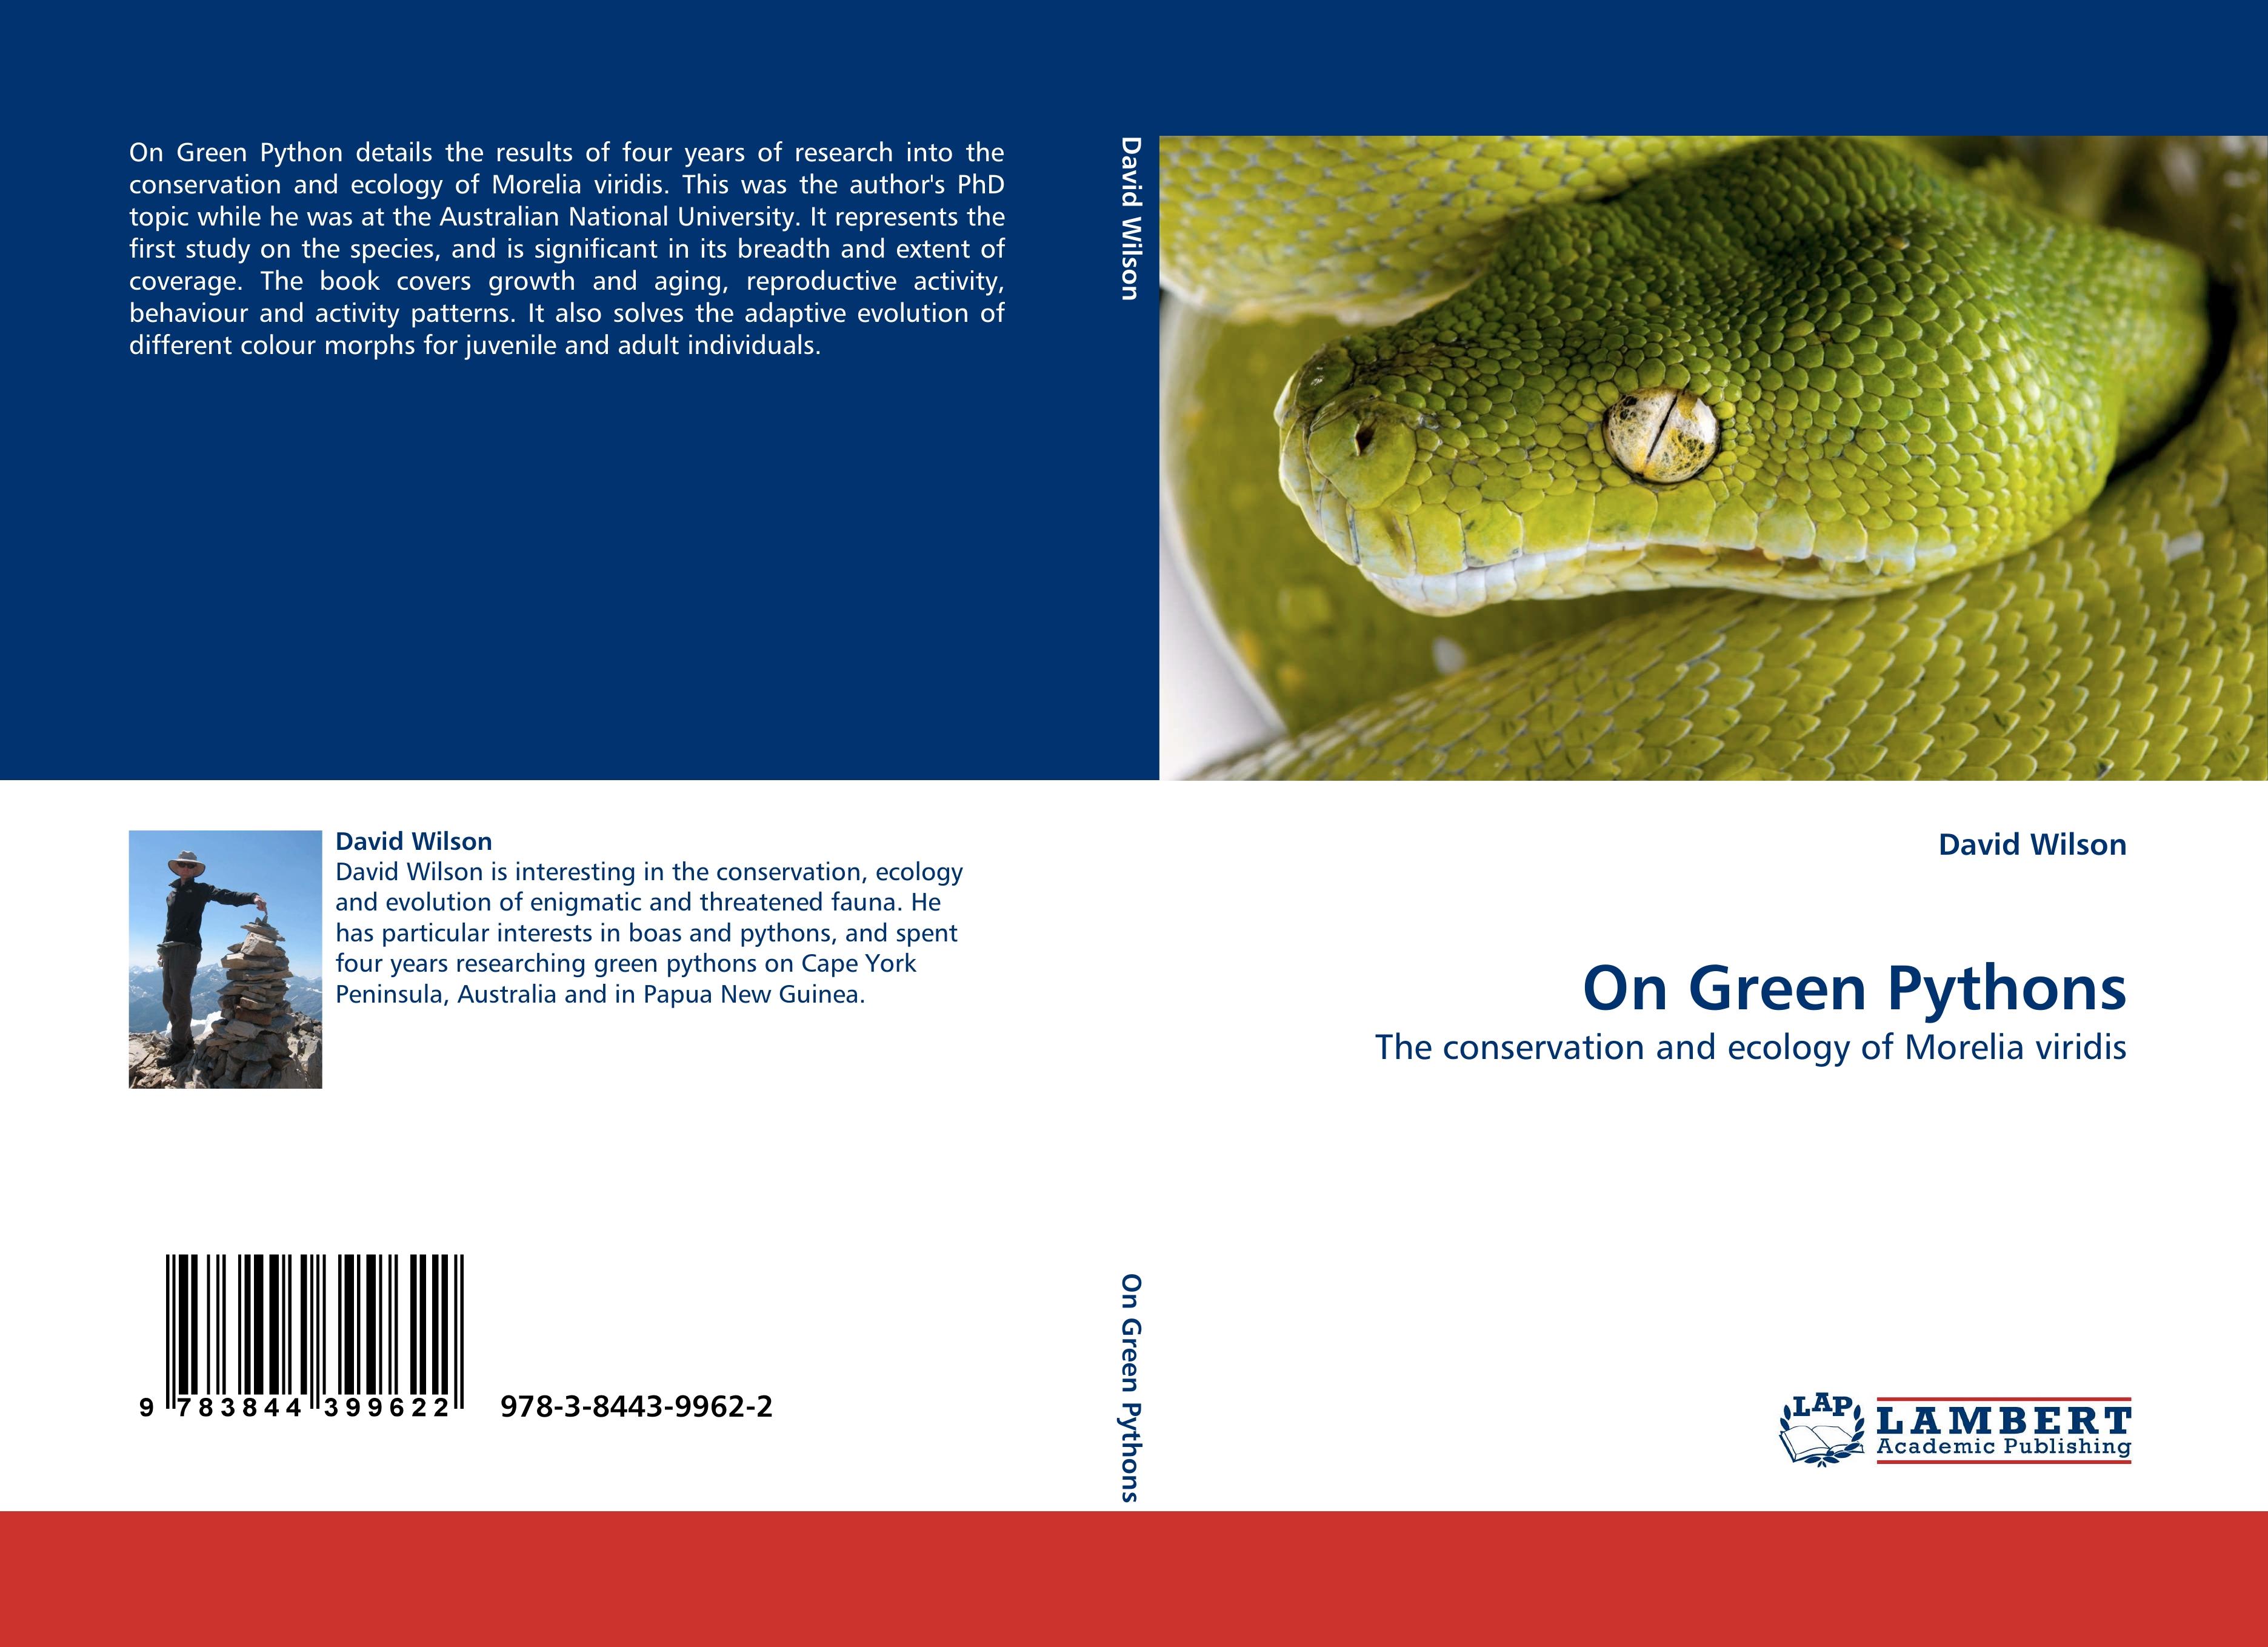 On Green Pythons - David Wilson